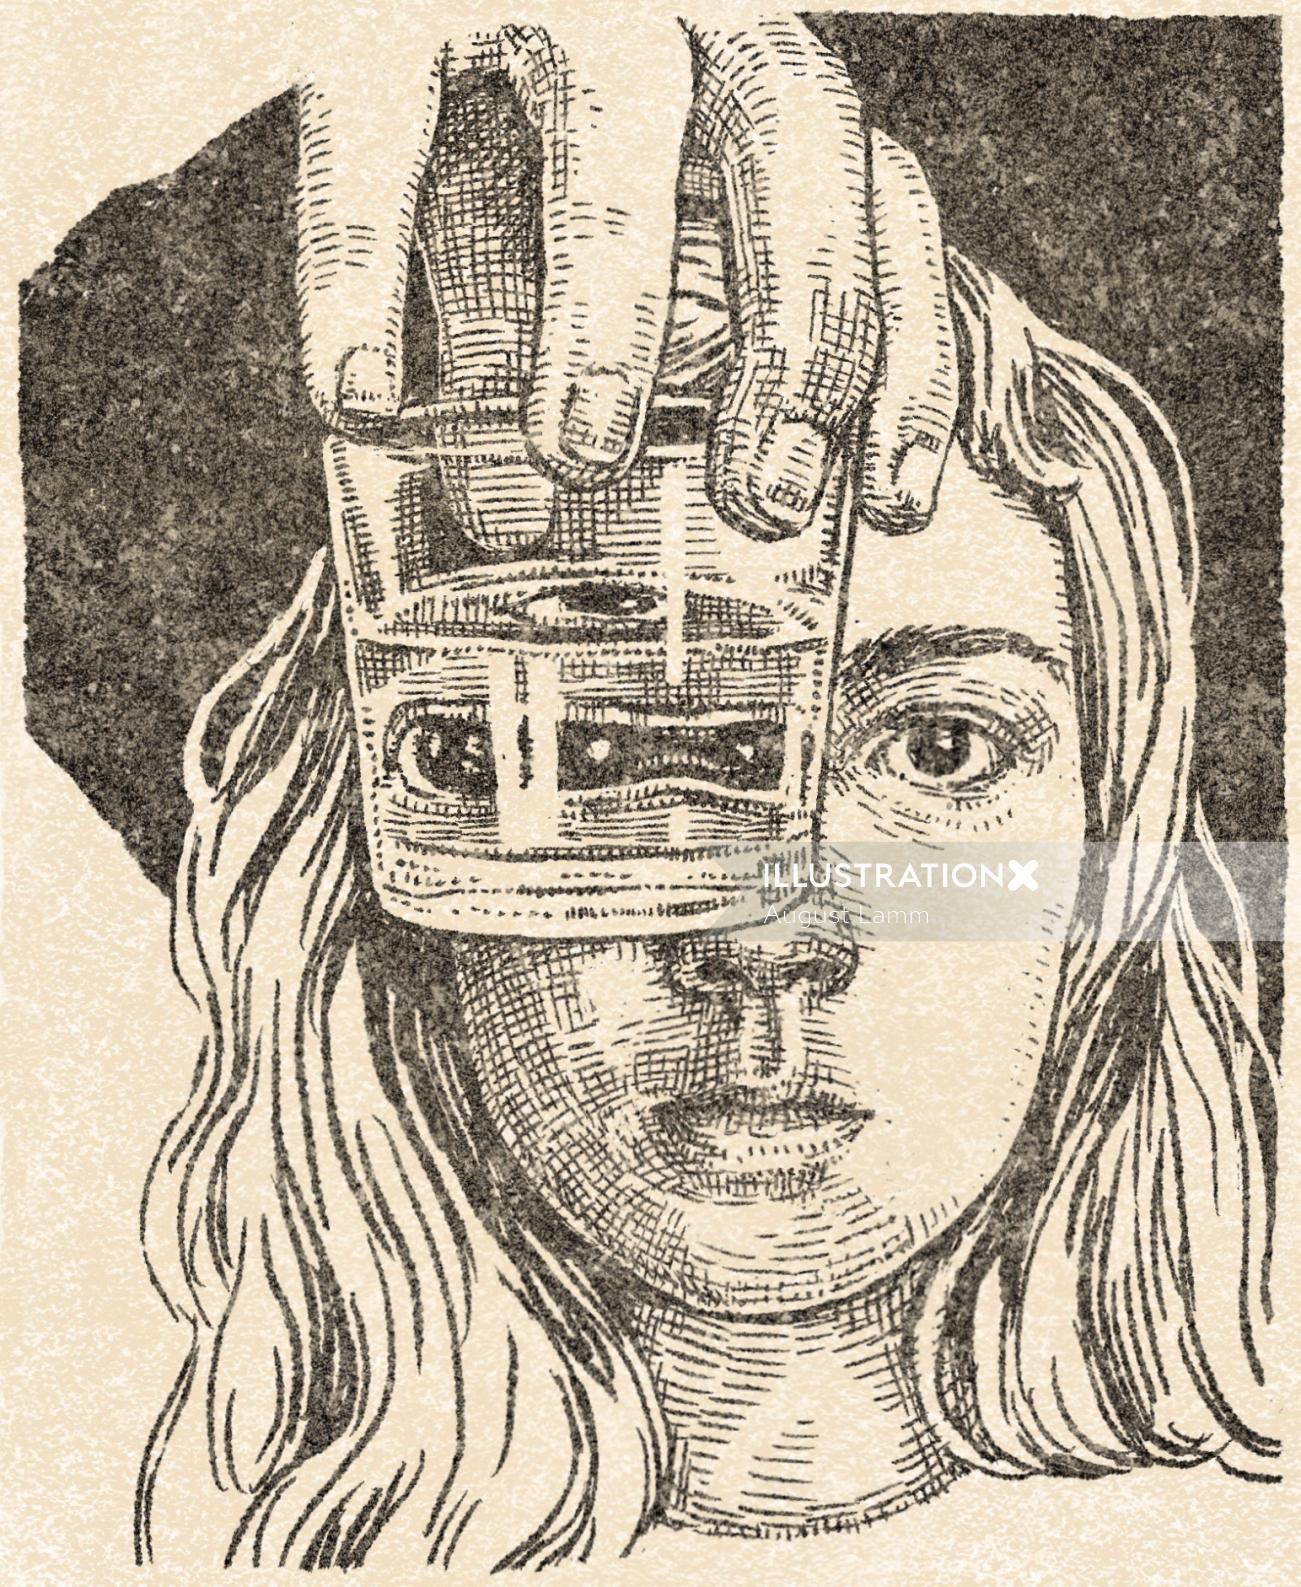 Retro Woman engraving illustration